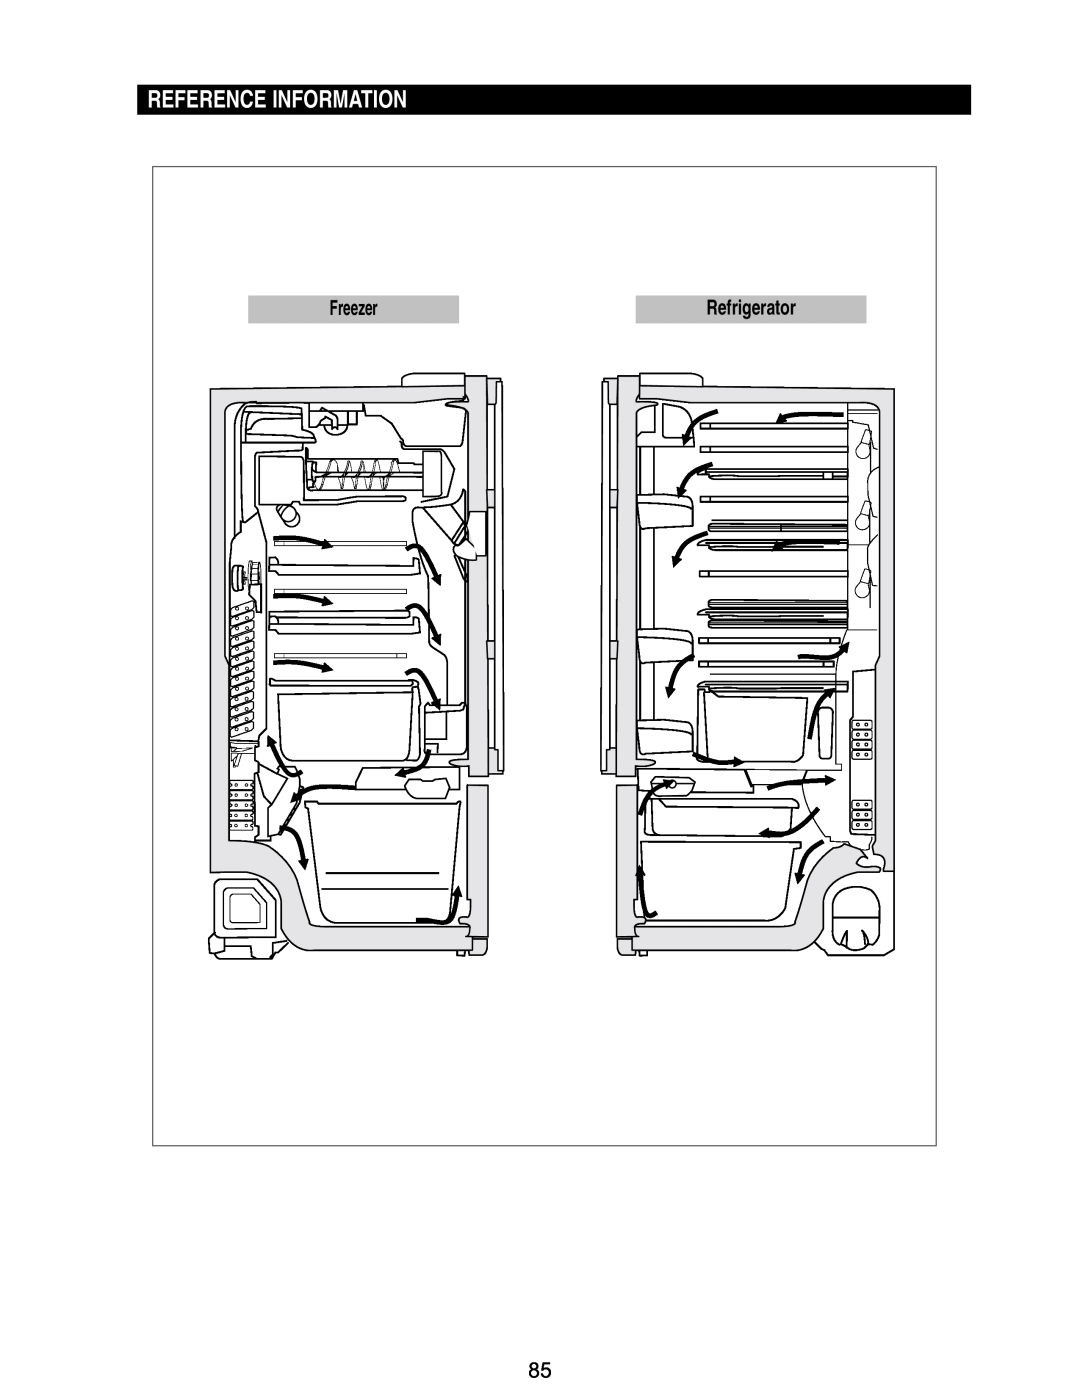 Samsung RM255BASB, RM255BABB manual Freezer, Refrigerator, Reference Information 